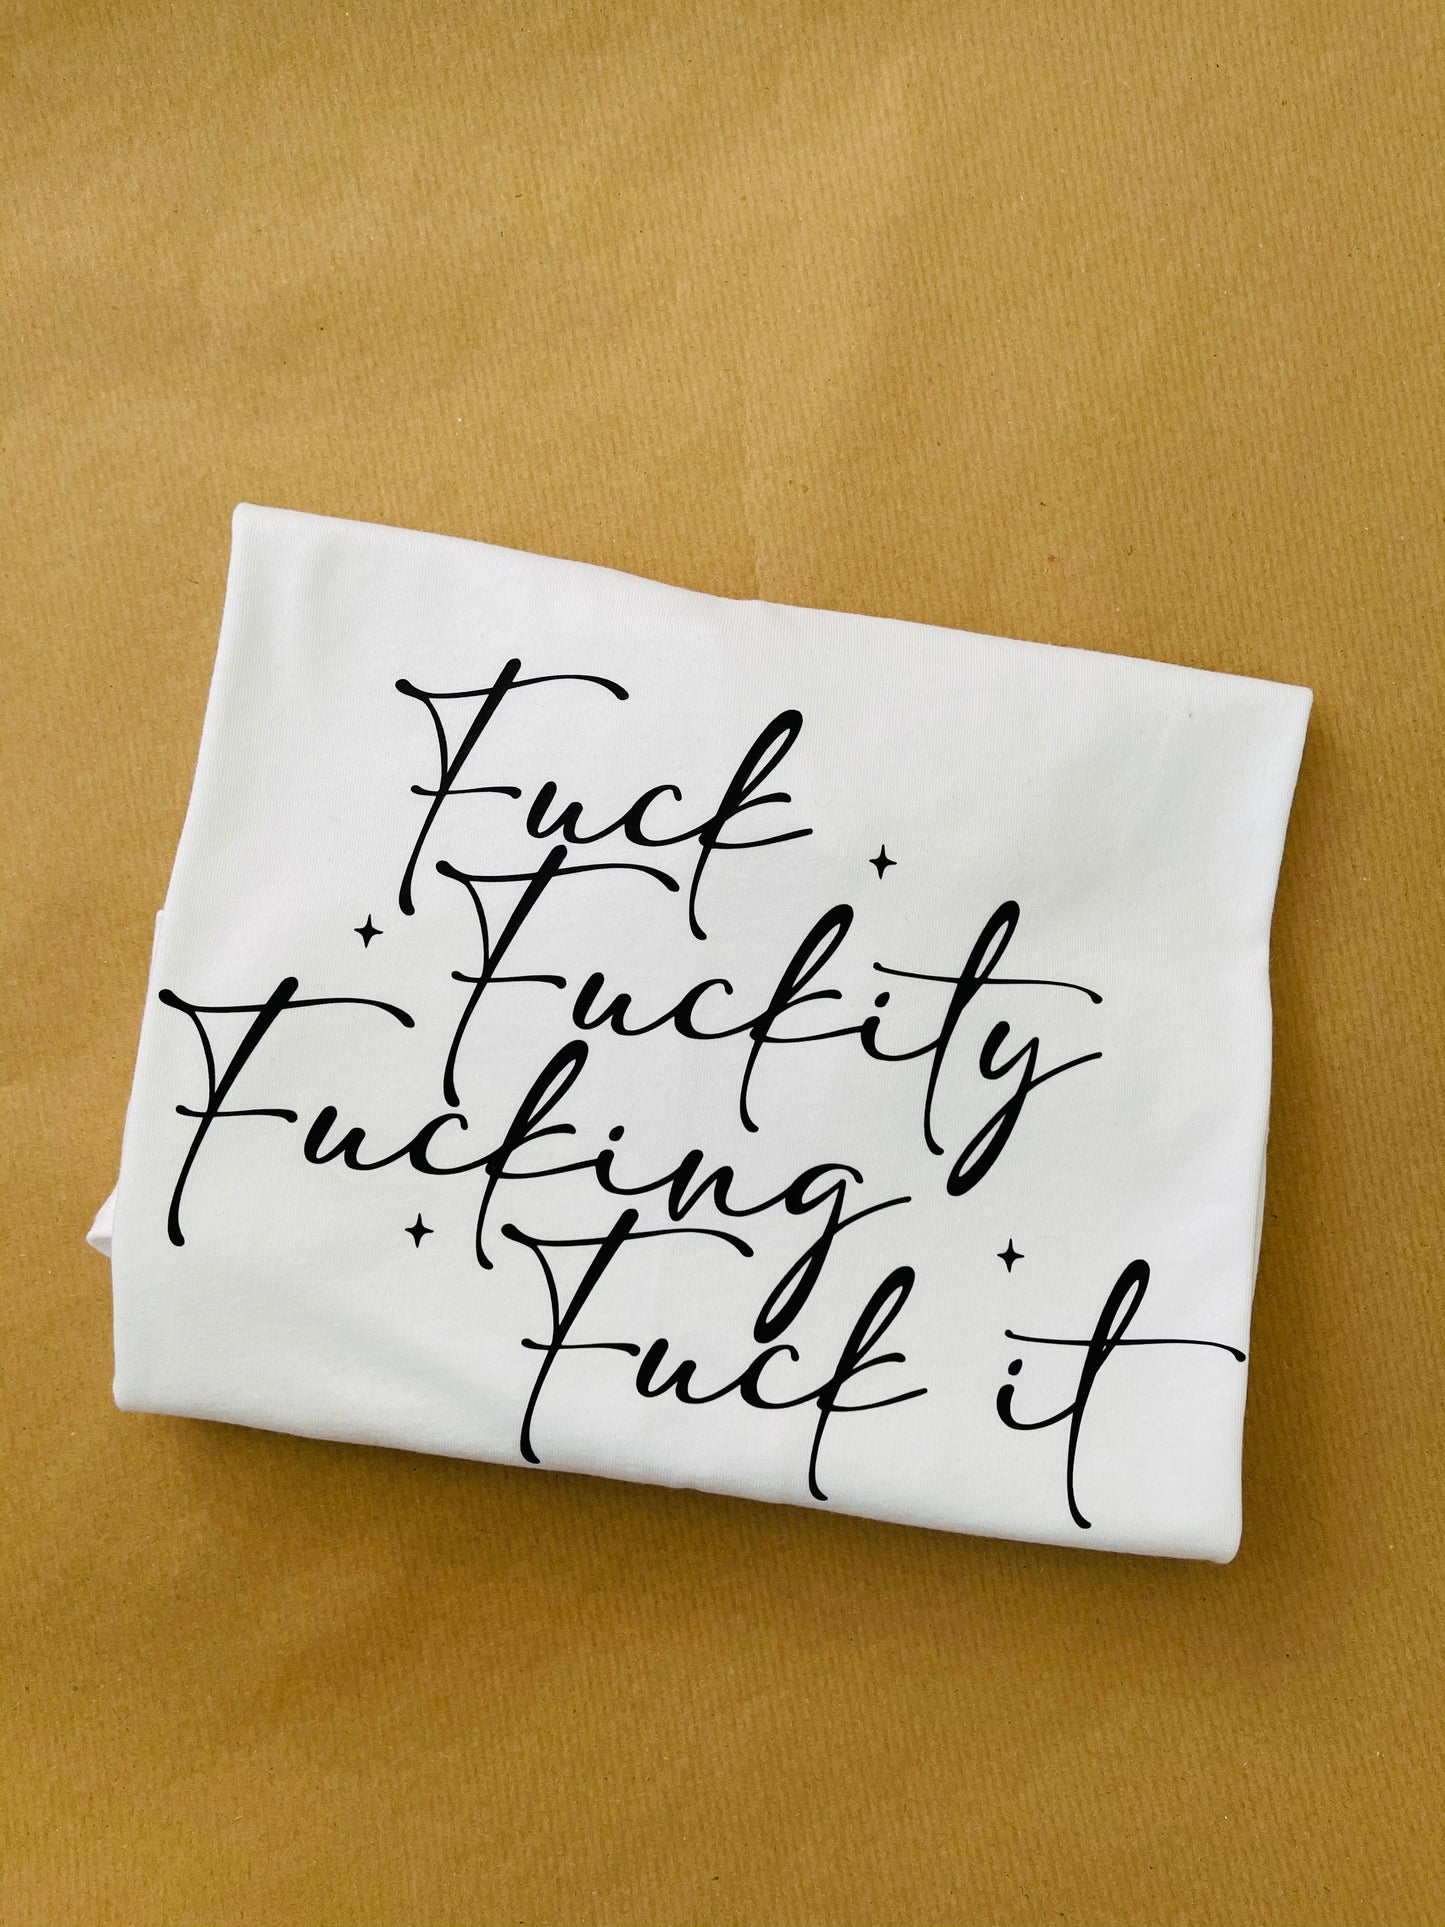 Fuck, Fuckity, Fucking , Fuck it : Sweary Slogan T-shirt